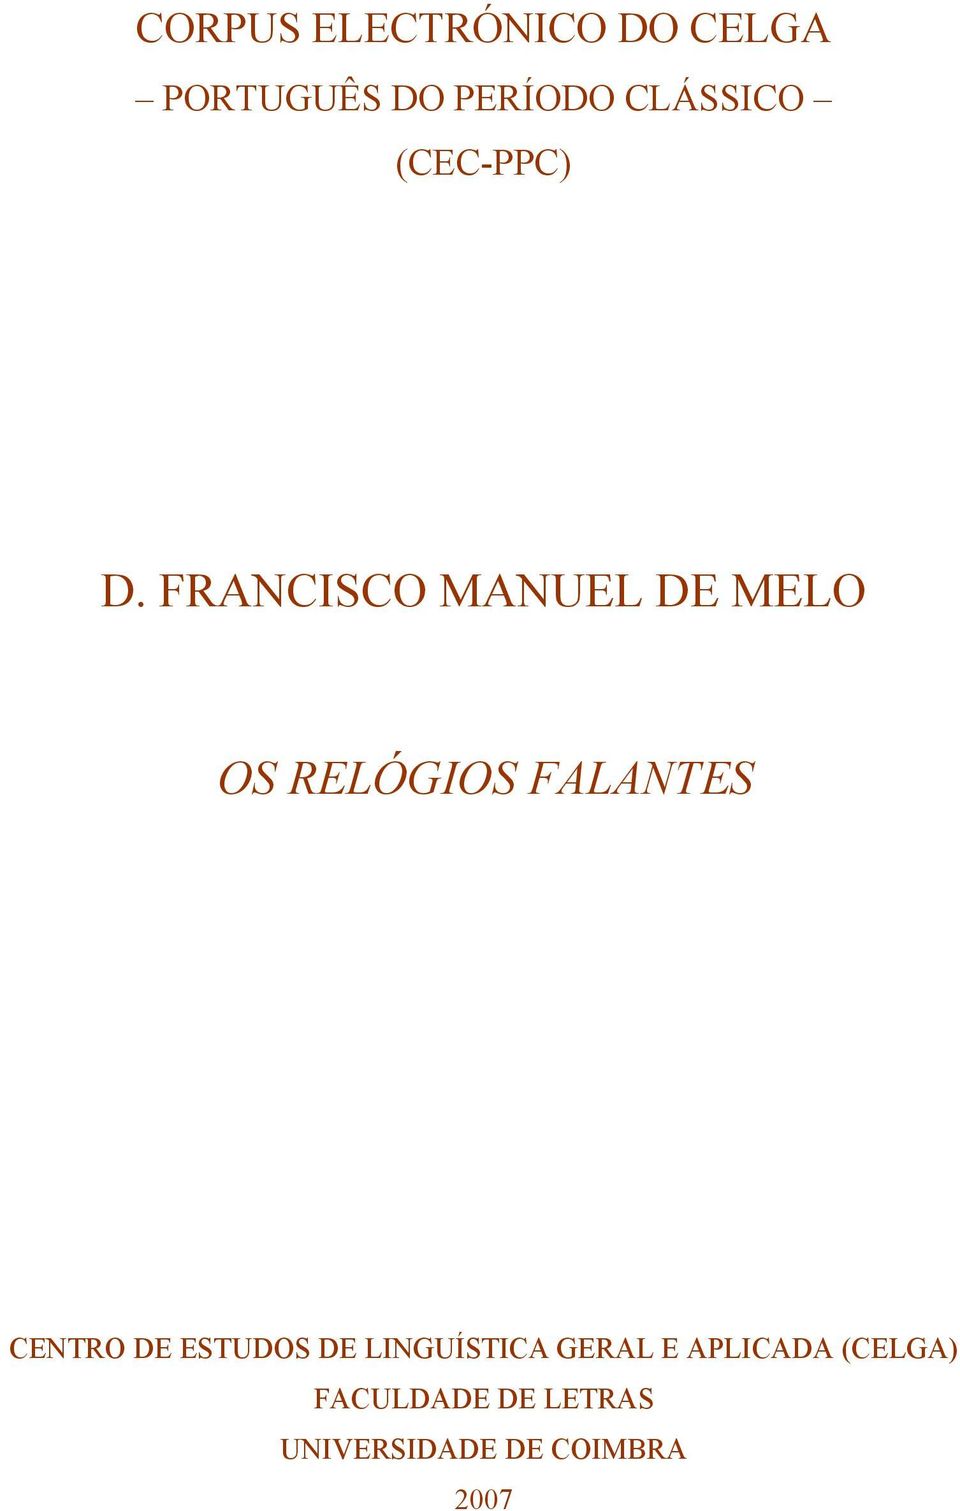 FRANCISCO MANUEL DE MELO OS RELÓGIOS FALANTES CENTRO DE